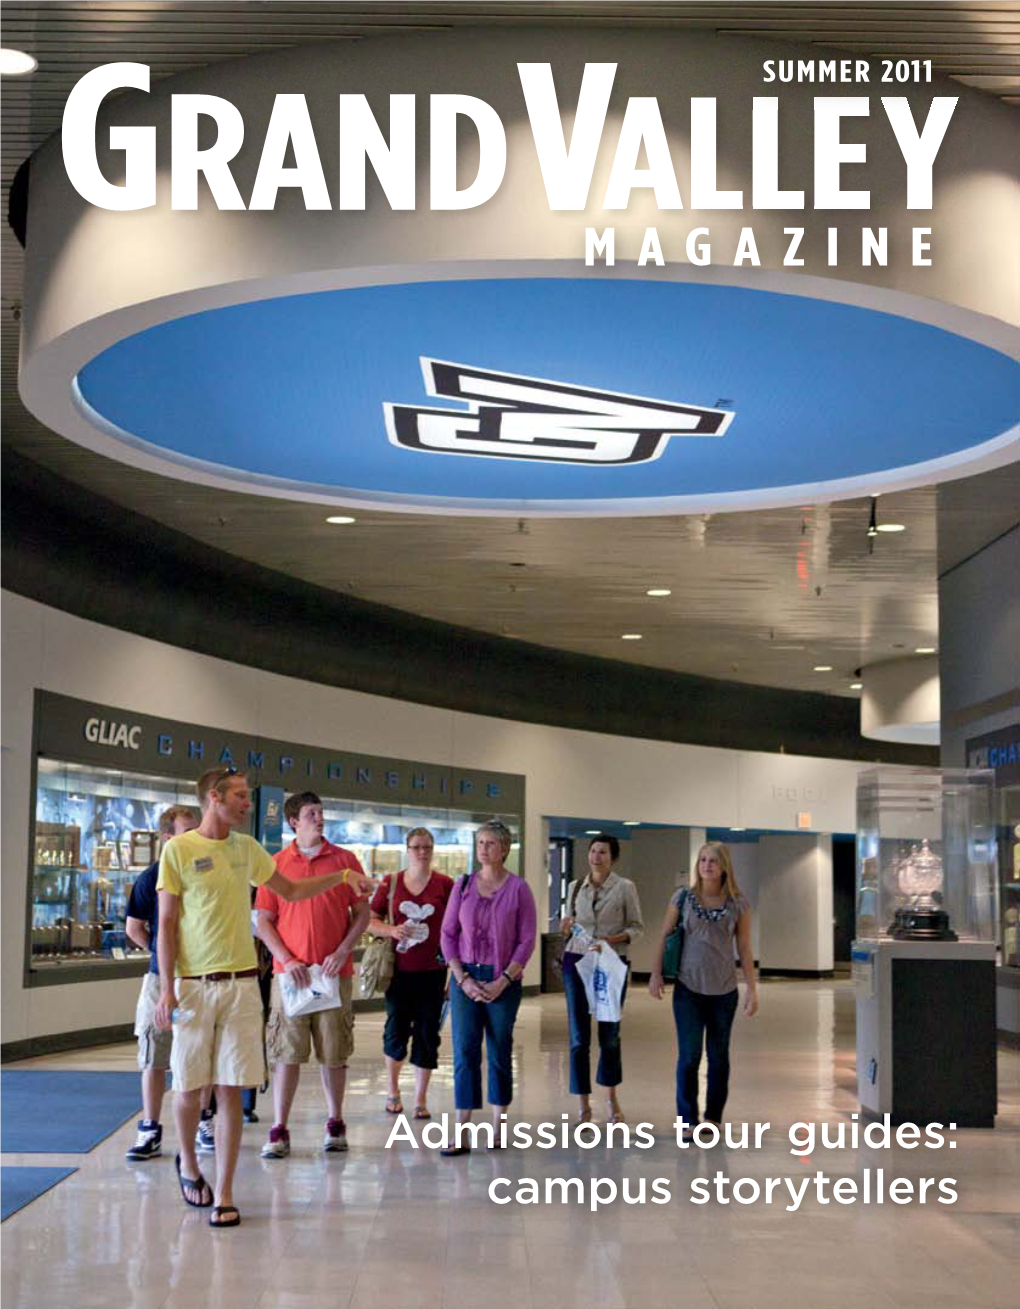 Representing Grand Valley